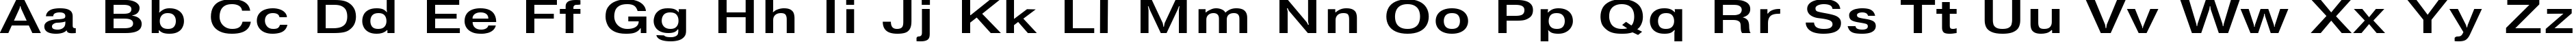 Пример написания английского алфавита шрифтом NTHarmonica Bold140b